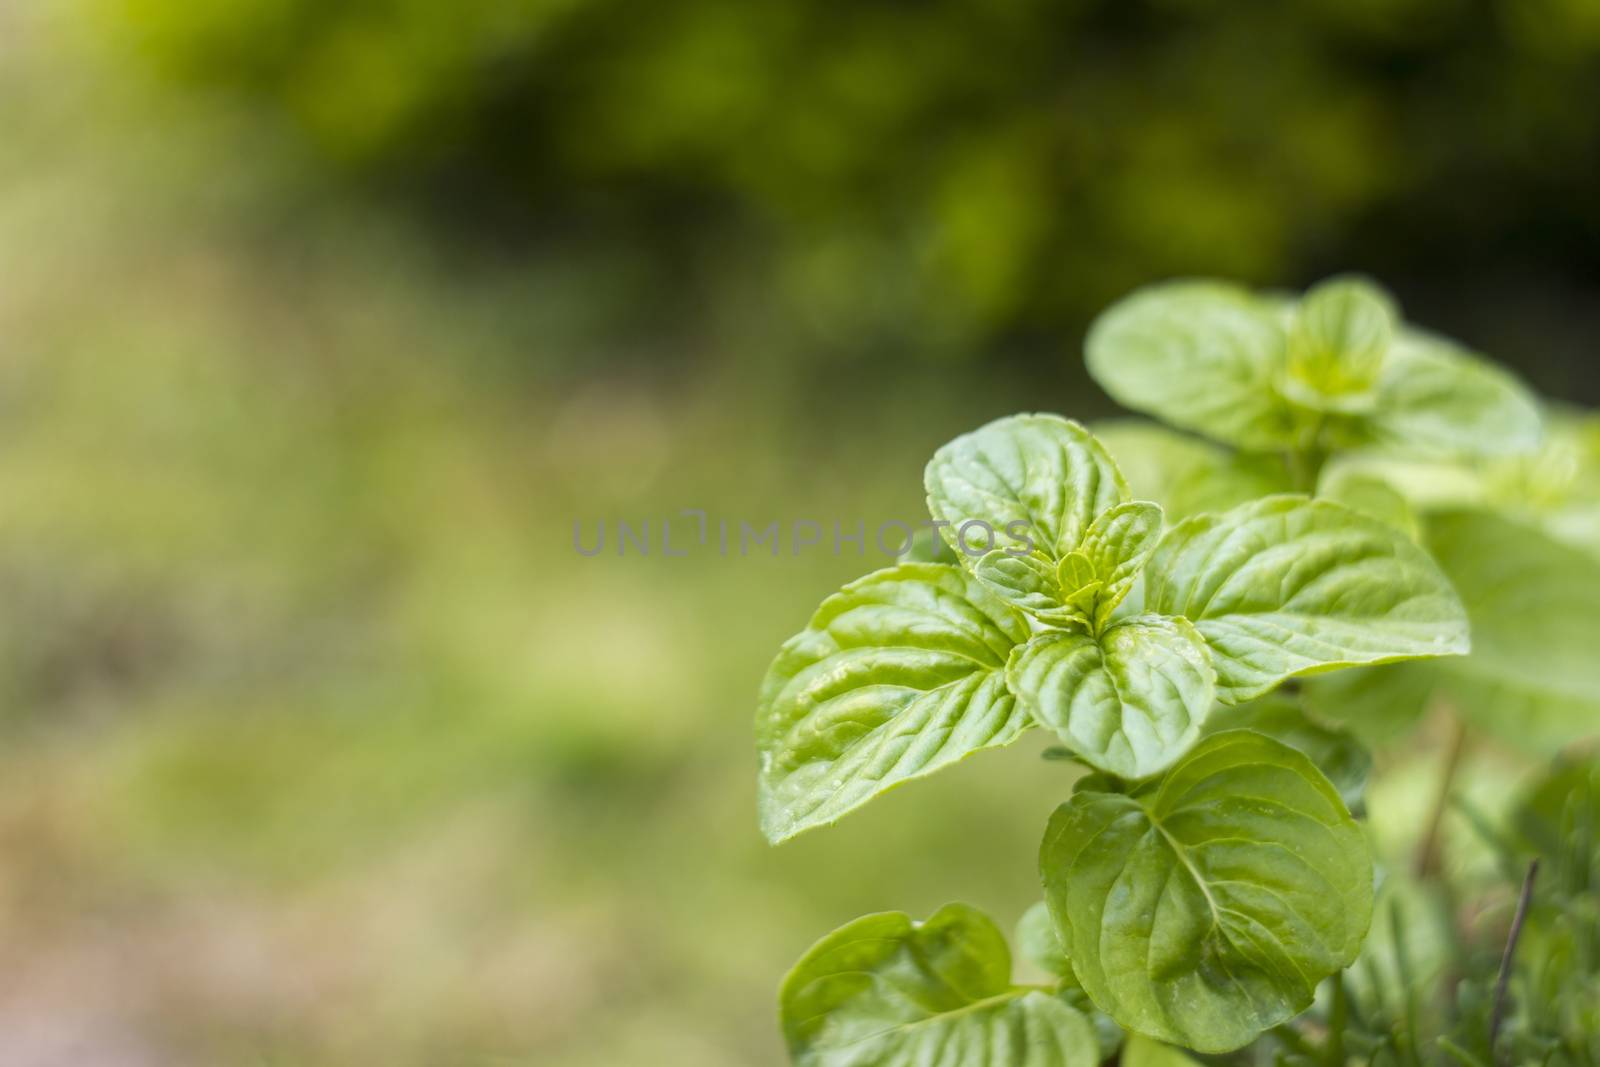 Mint plant grown at garden by miradrozdowski